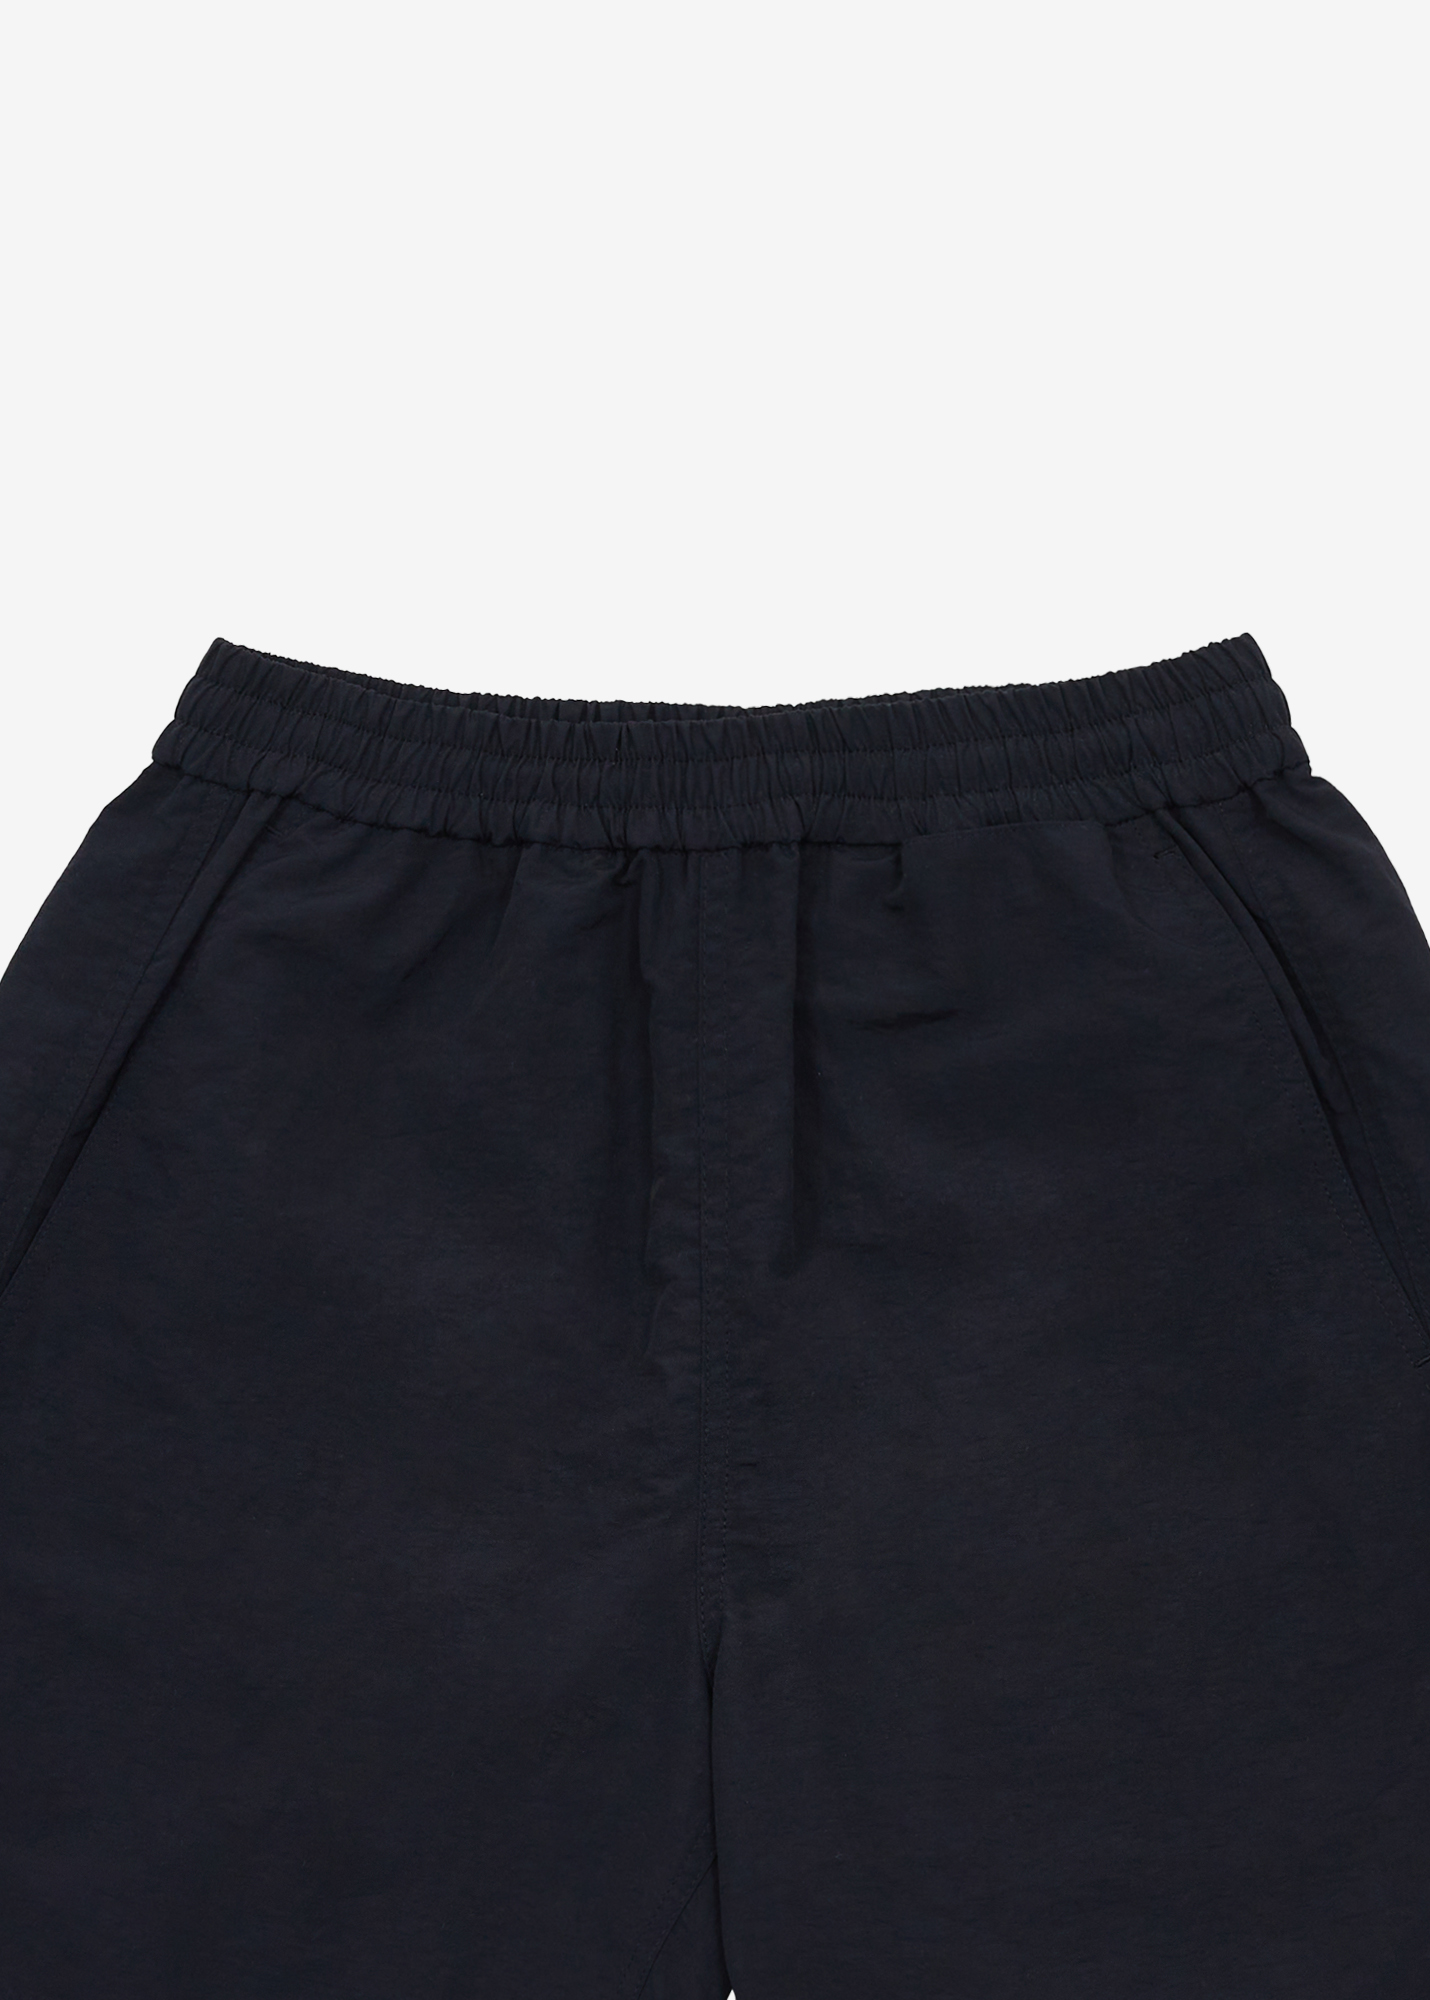 Pocket shorts pants - Black